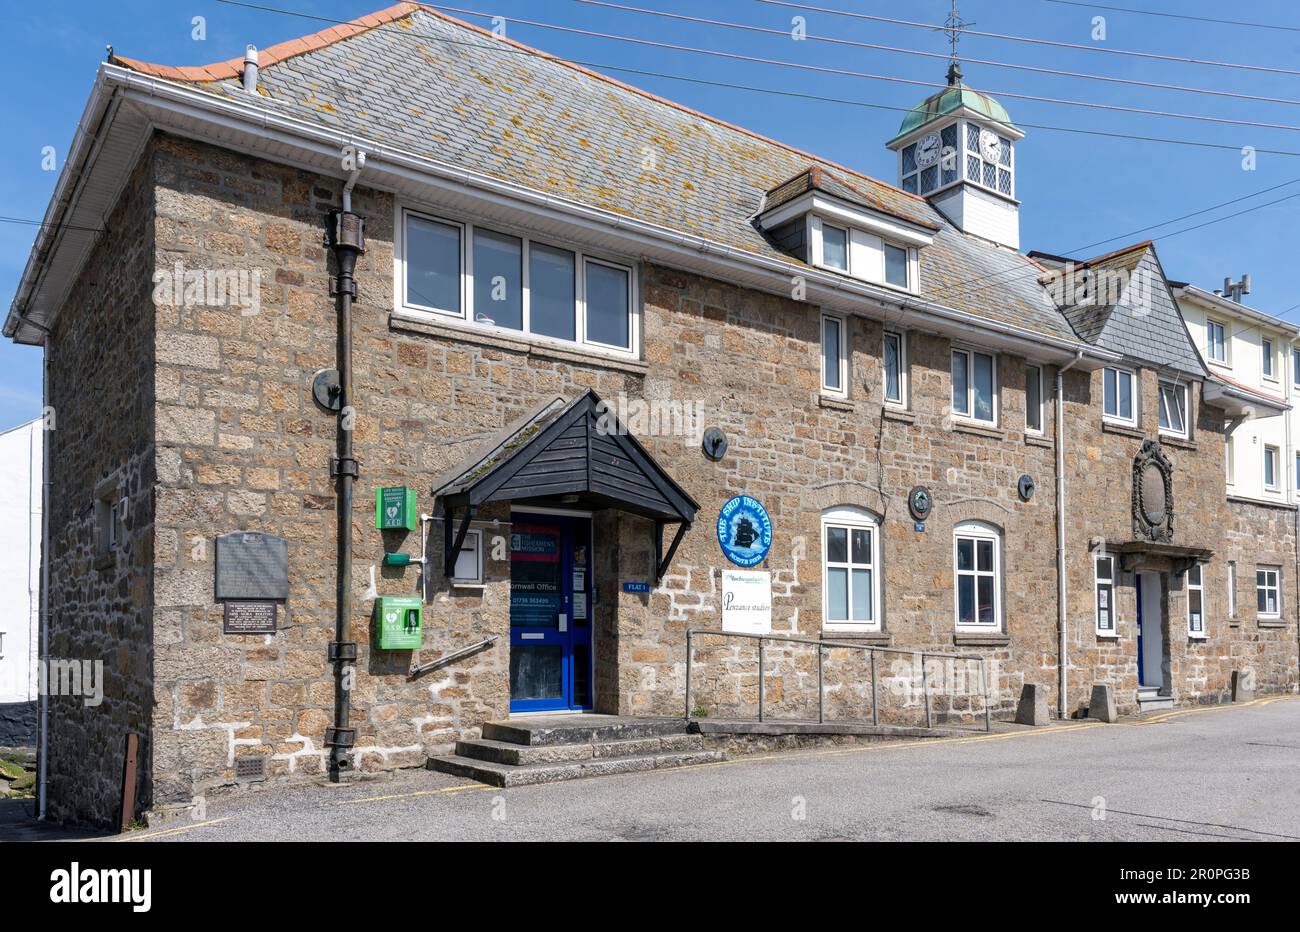 La mission des pêcheurs, le Ship Institute, North Pier, Newlyn, Penzance, Cornwall, Angleterre, Royaume-Uni. Banque D'Images